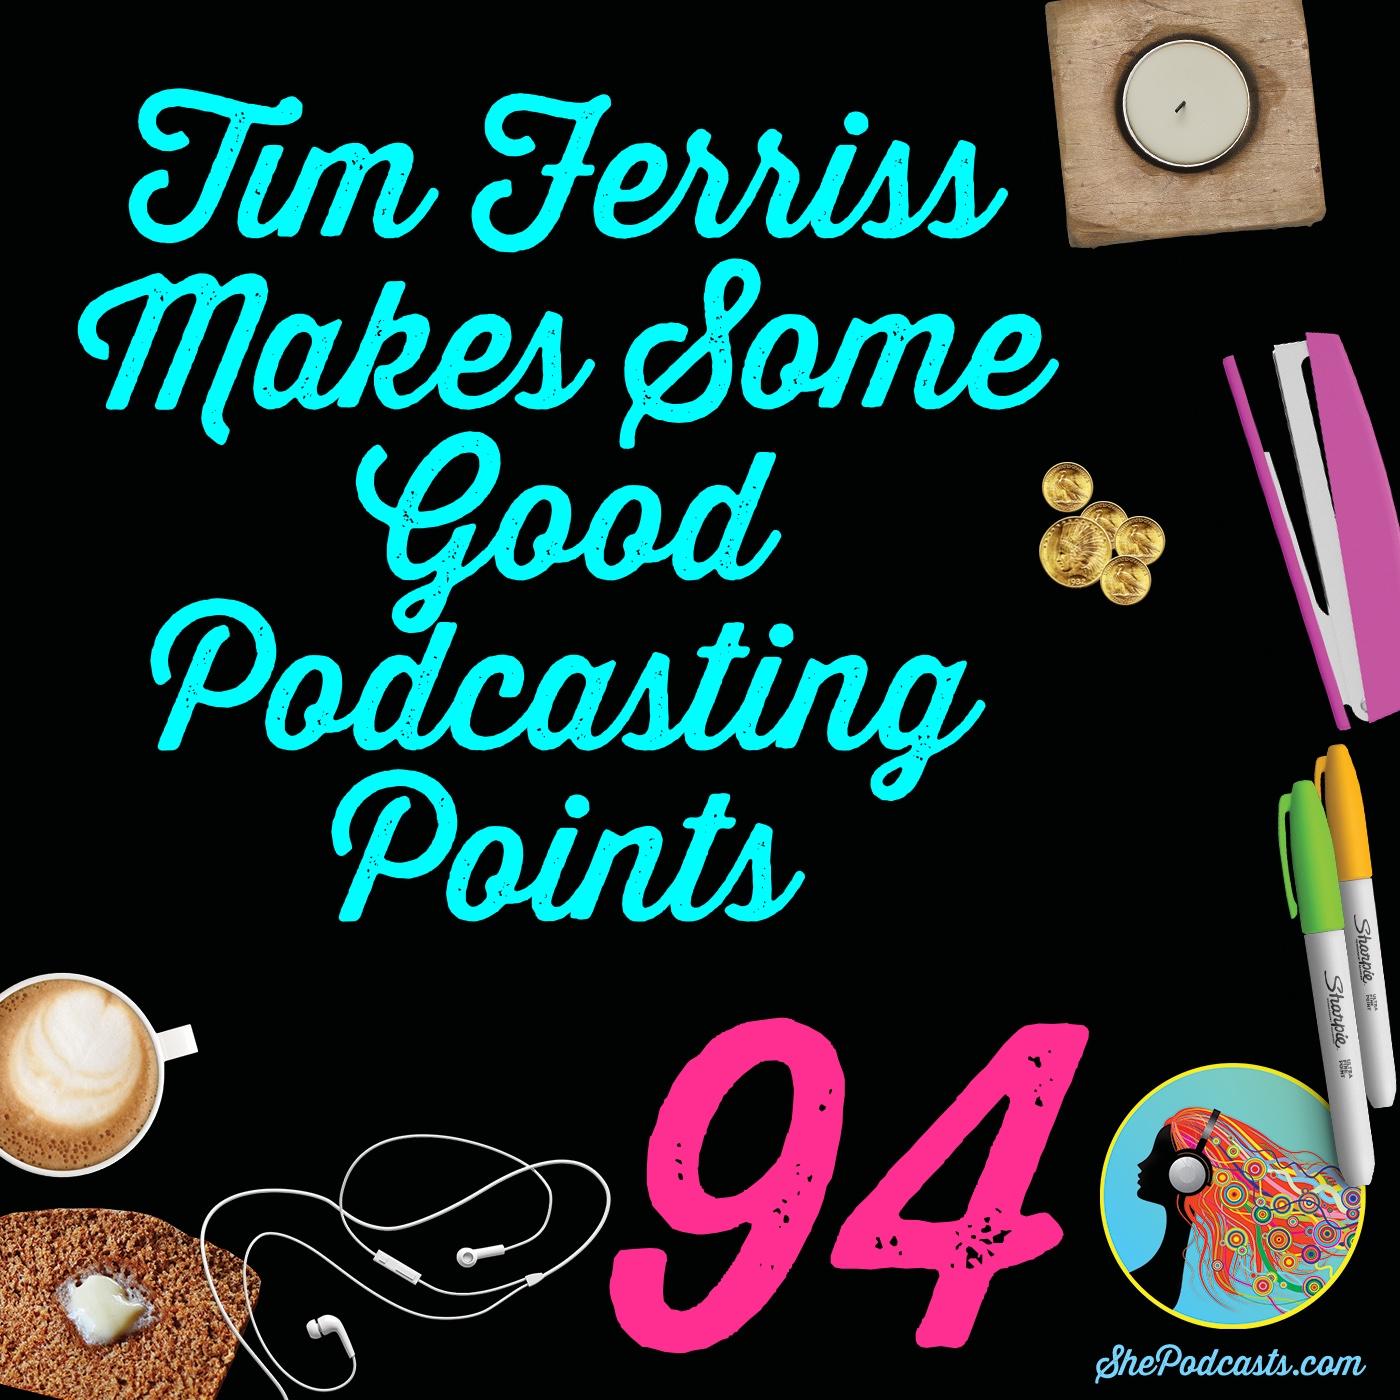 tim ferriss podcasting advice